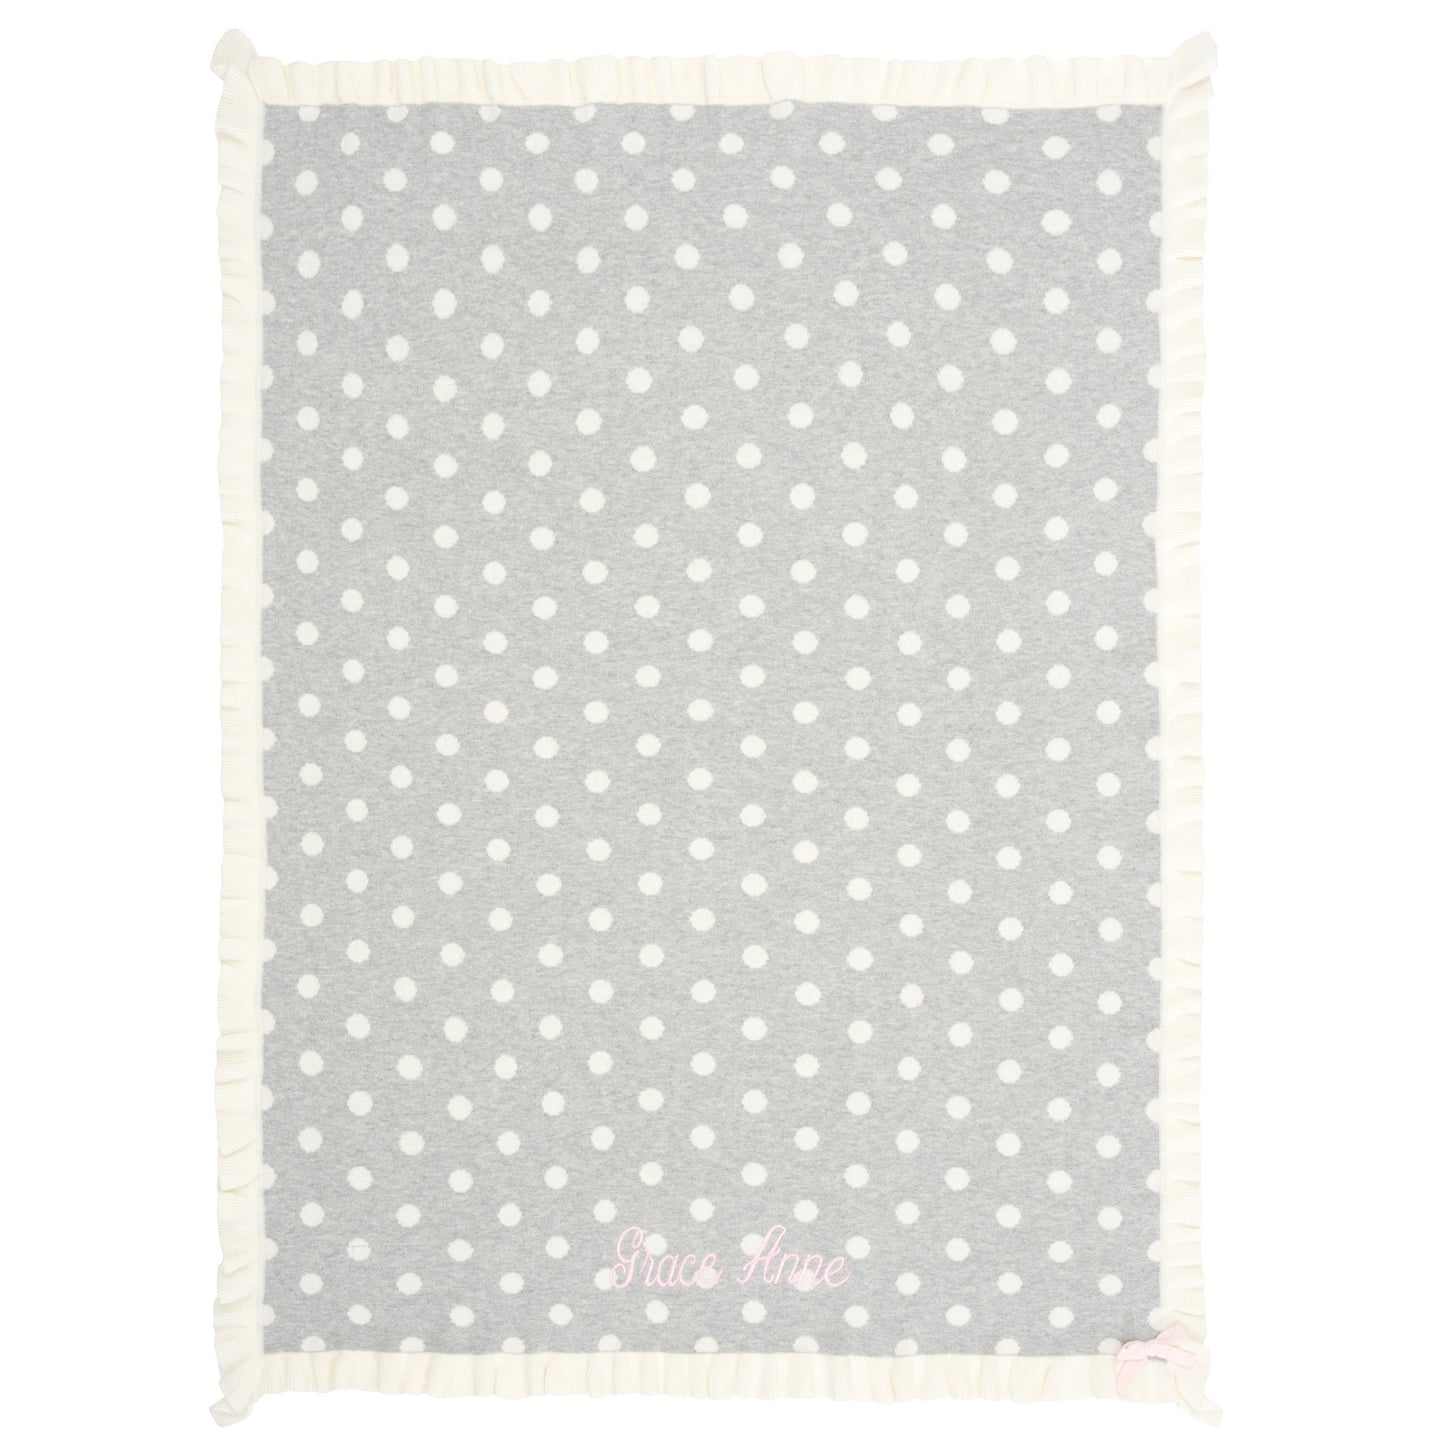 Gray Polka Dot Ruffle Cotton Baby Blanket